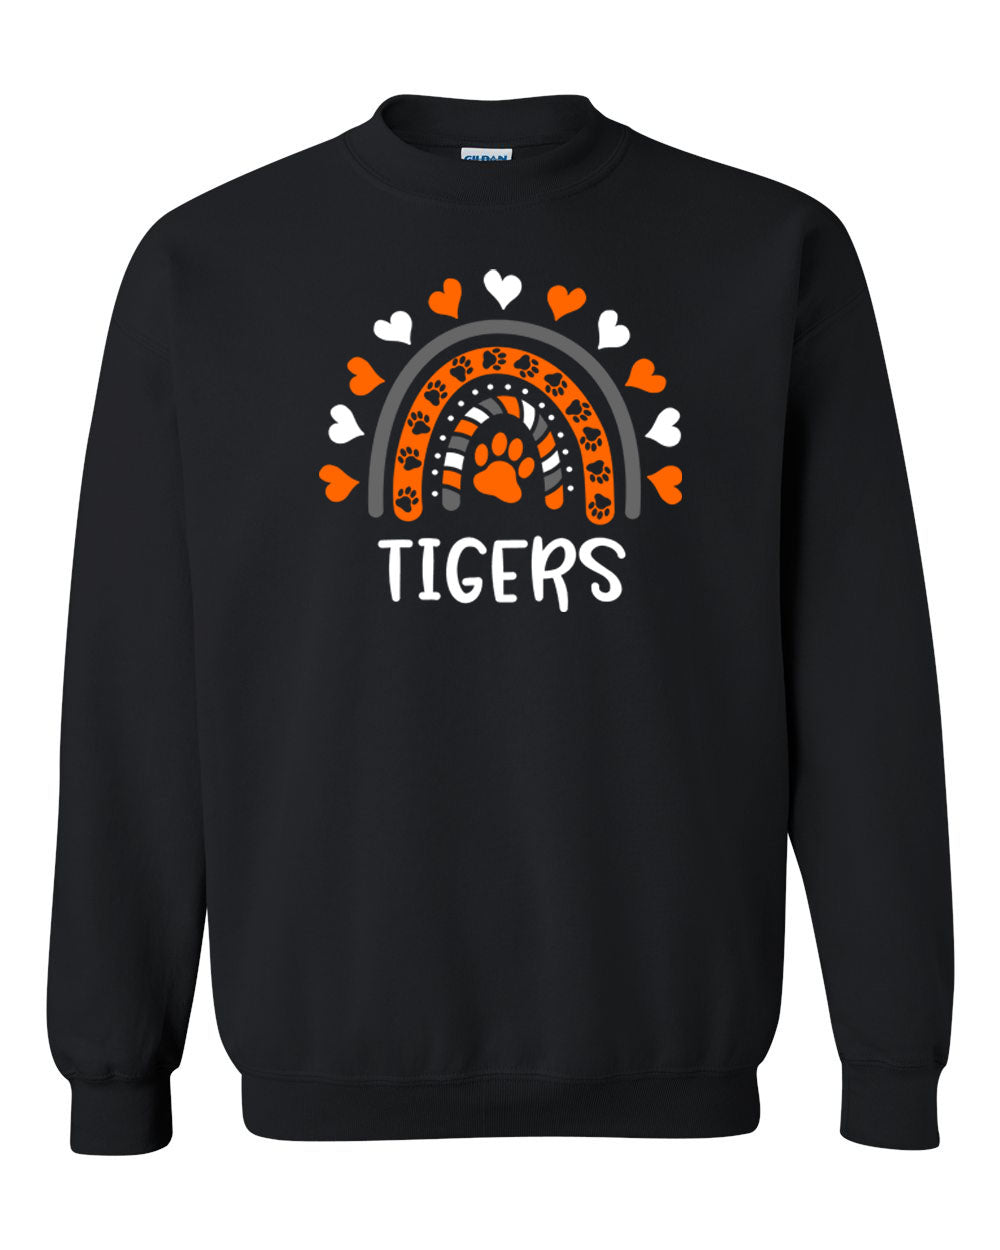 Tigers Design 4 non hooded sweatshirt